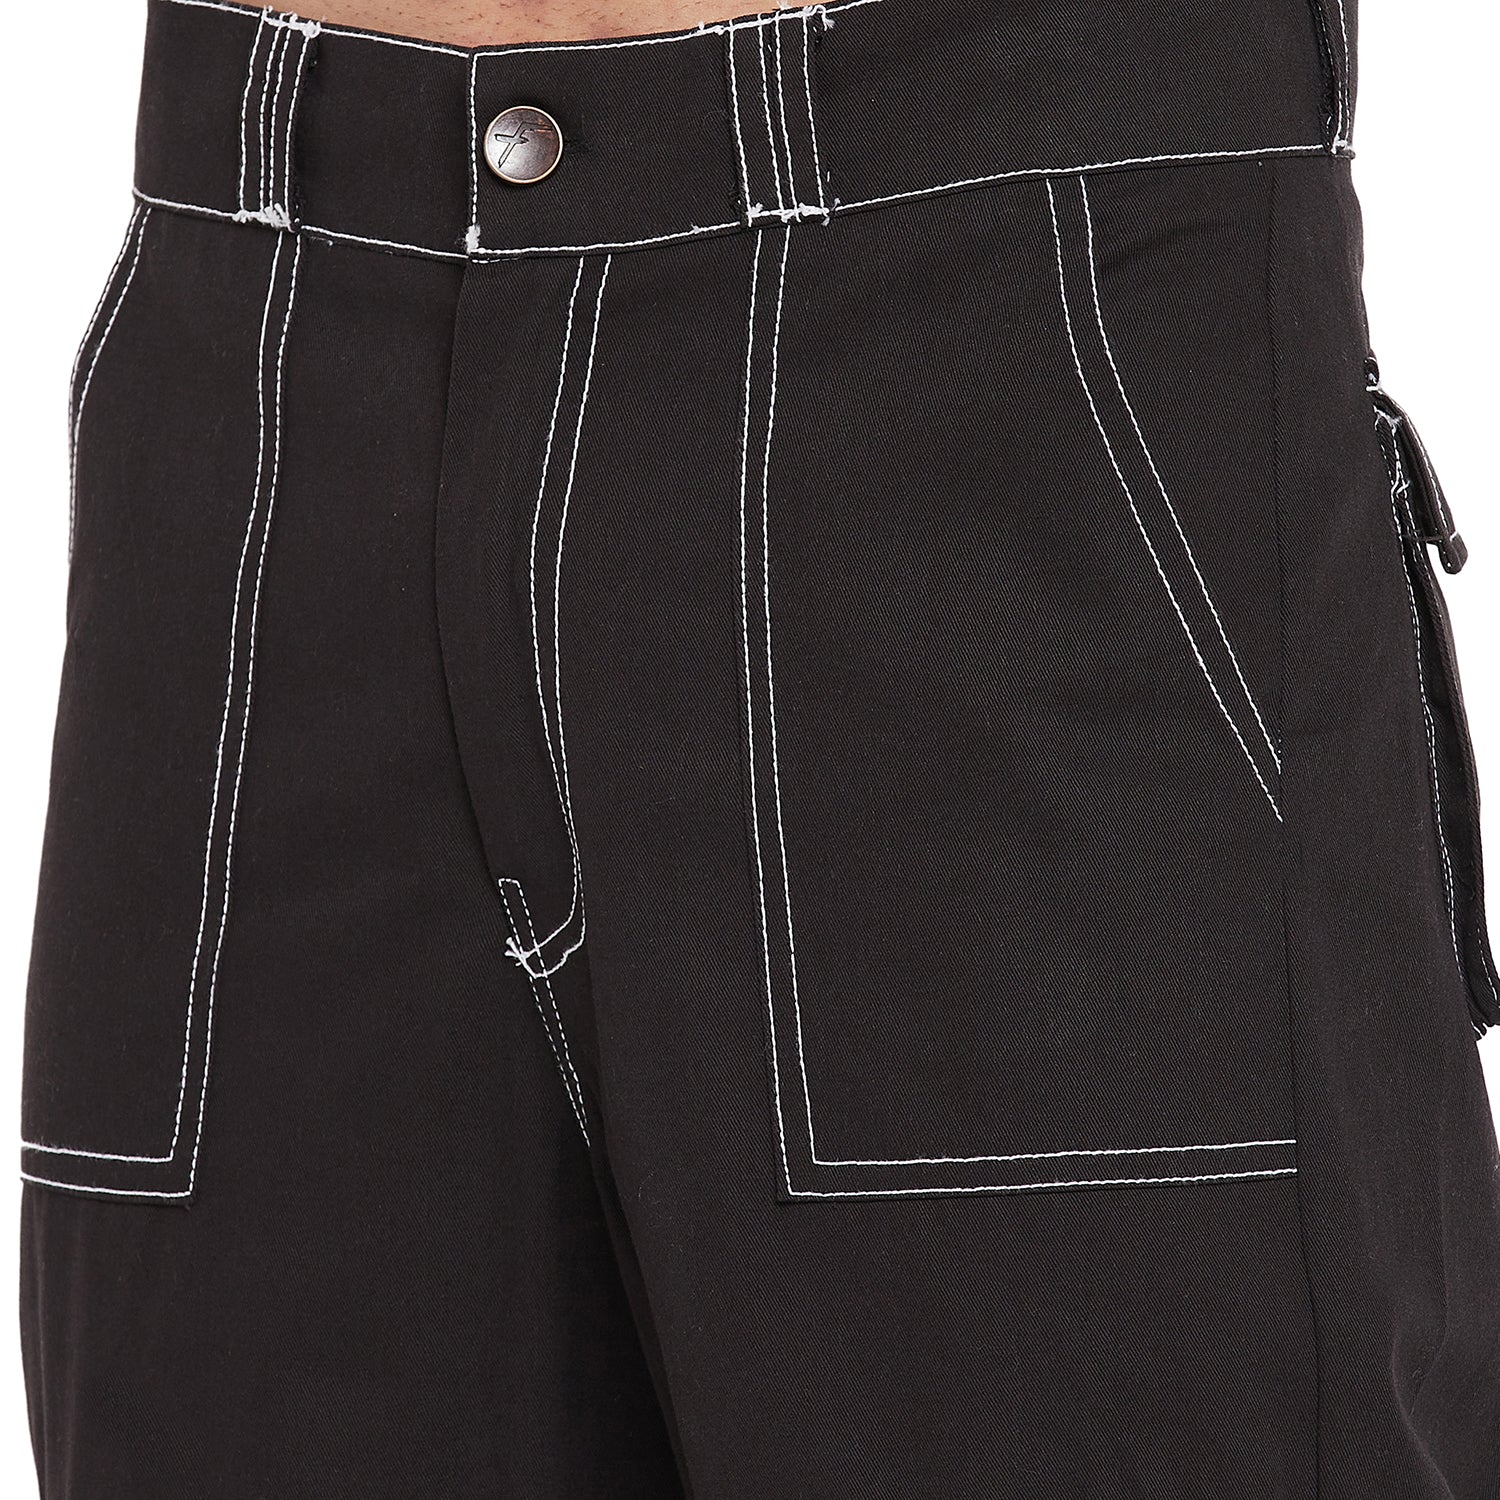 Work Trousers for Men  Buy Work Trousers Online  Black Hammer